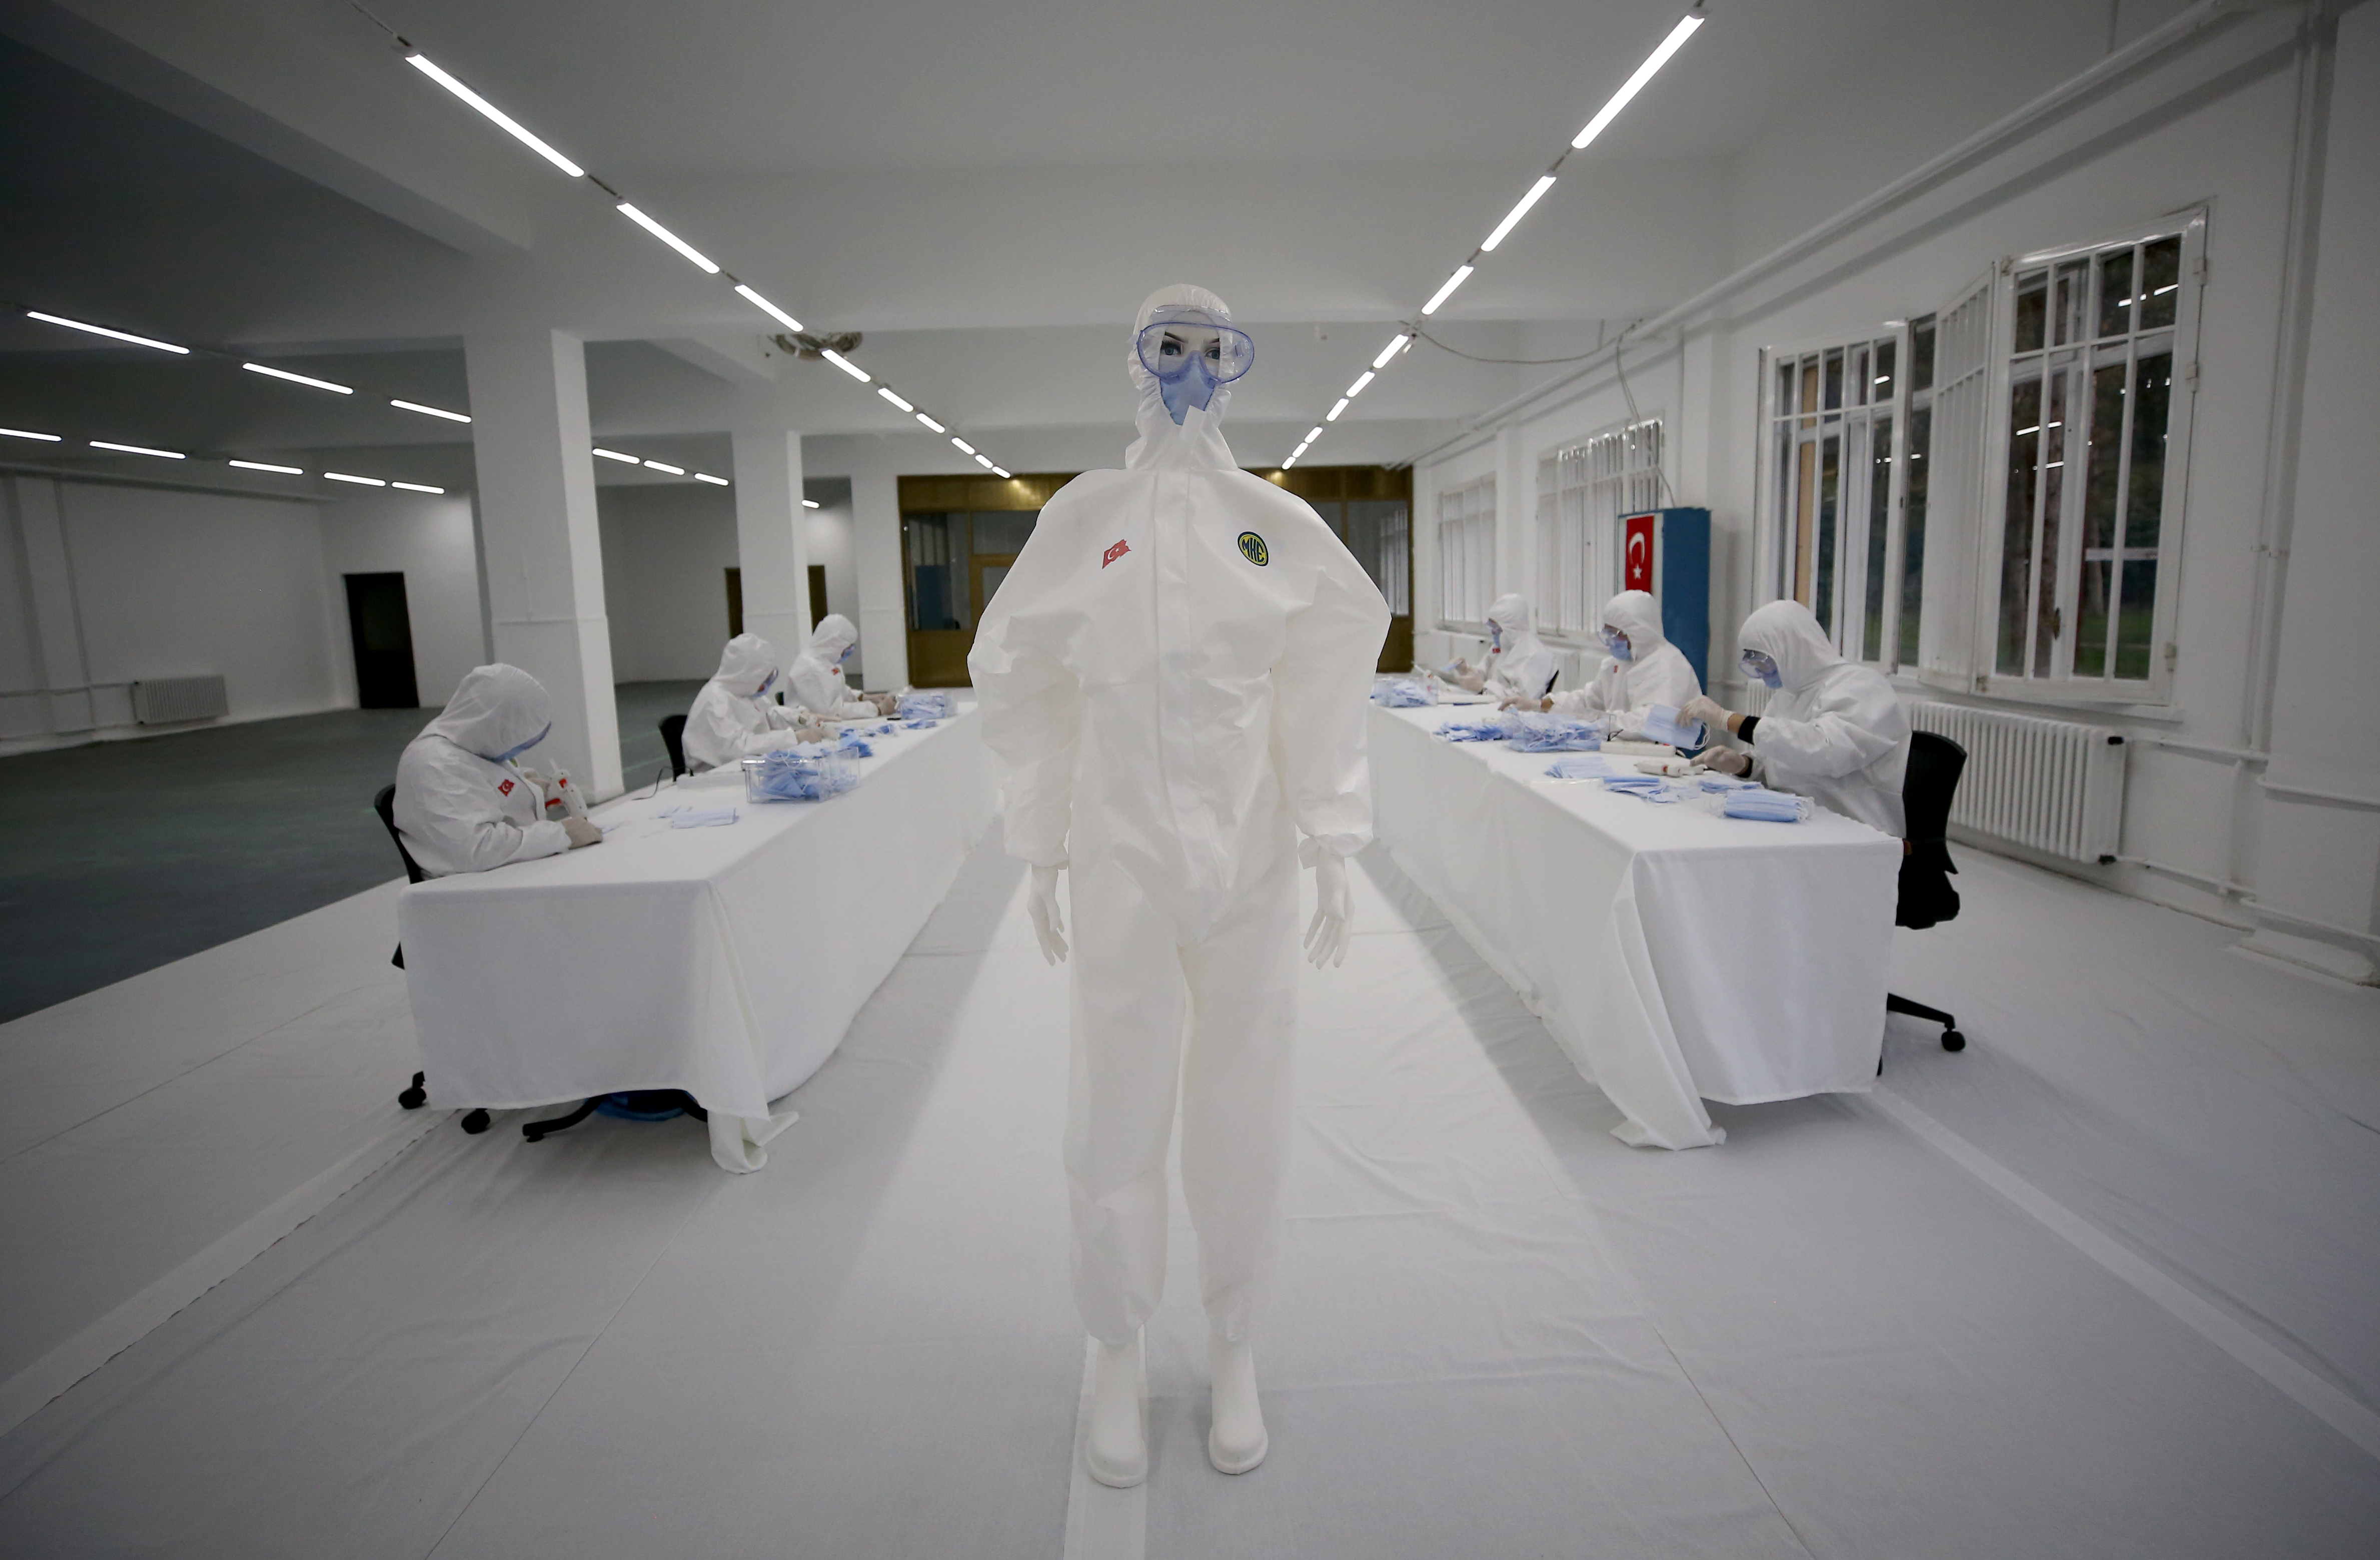 Turkey producing 1M masks every week amid pandemic